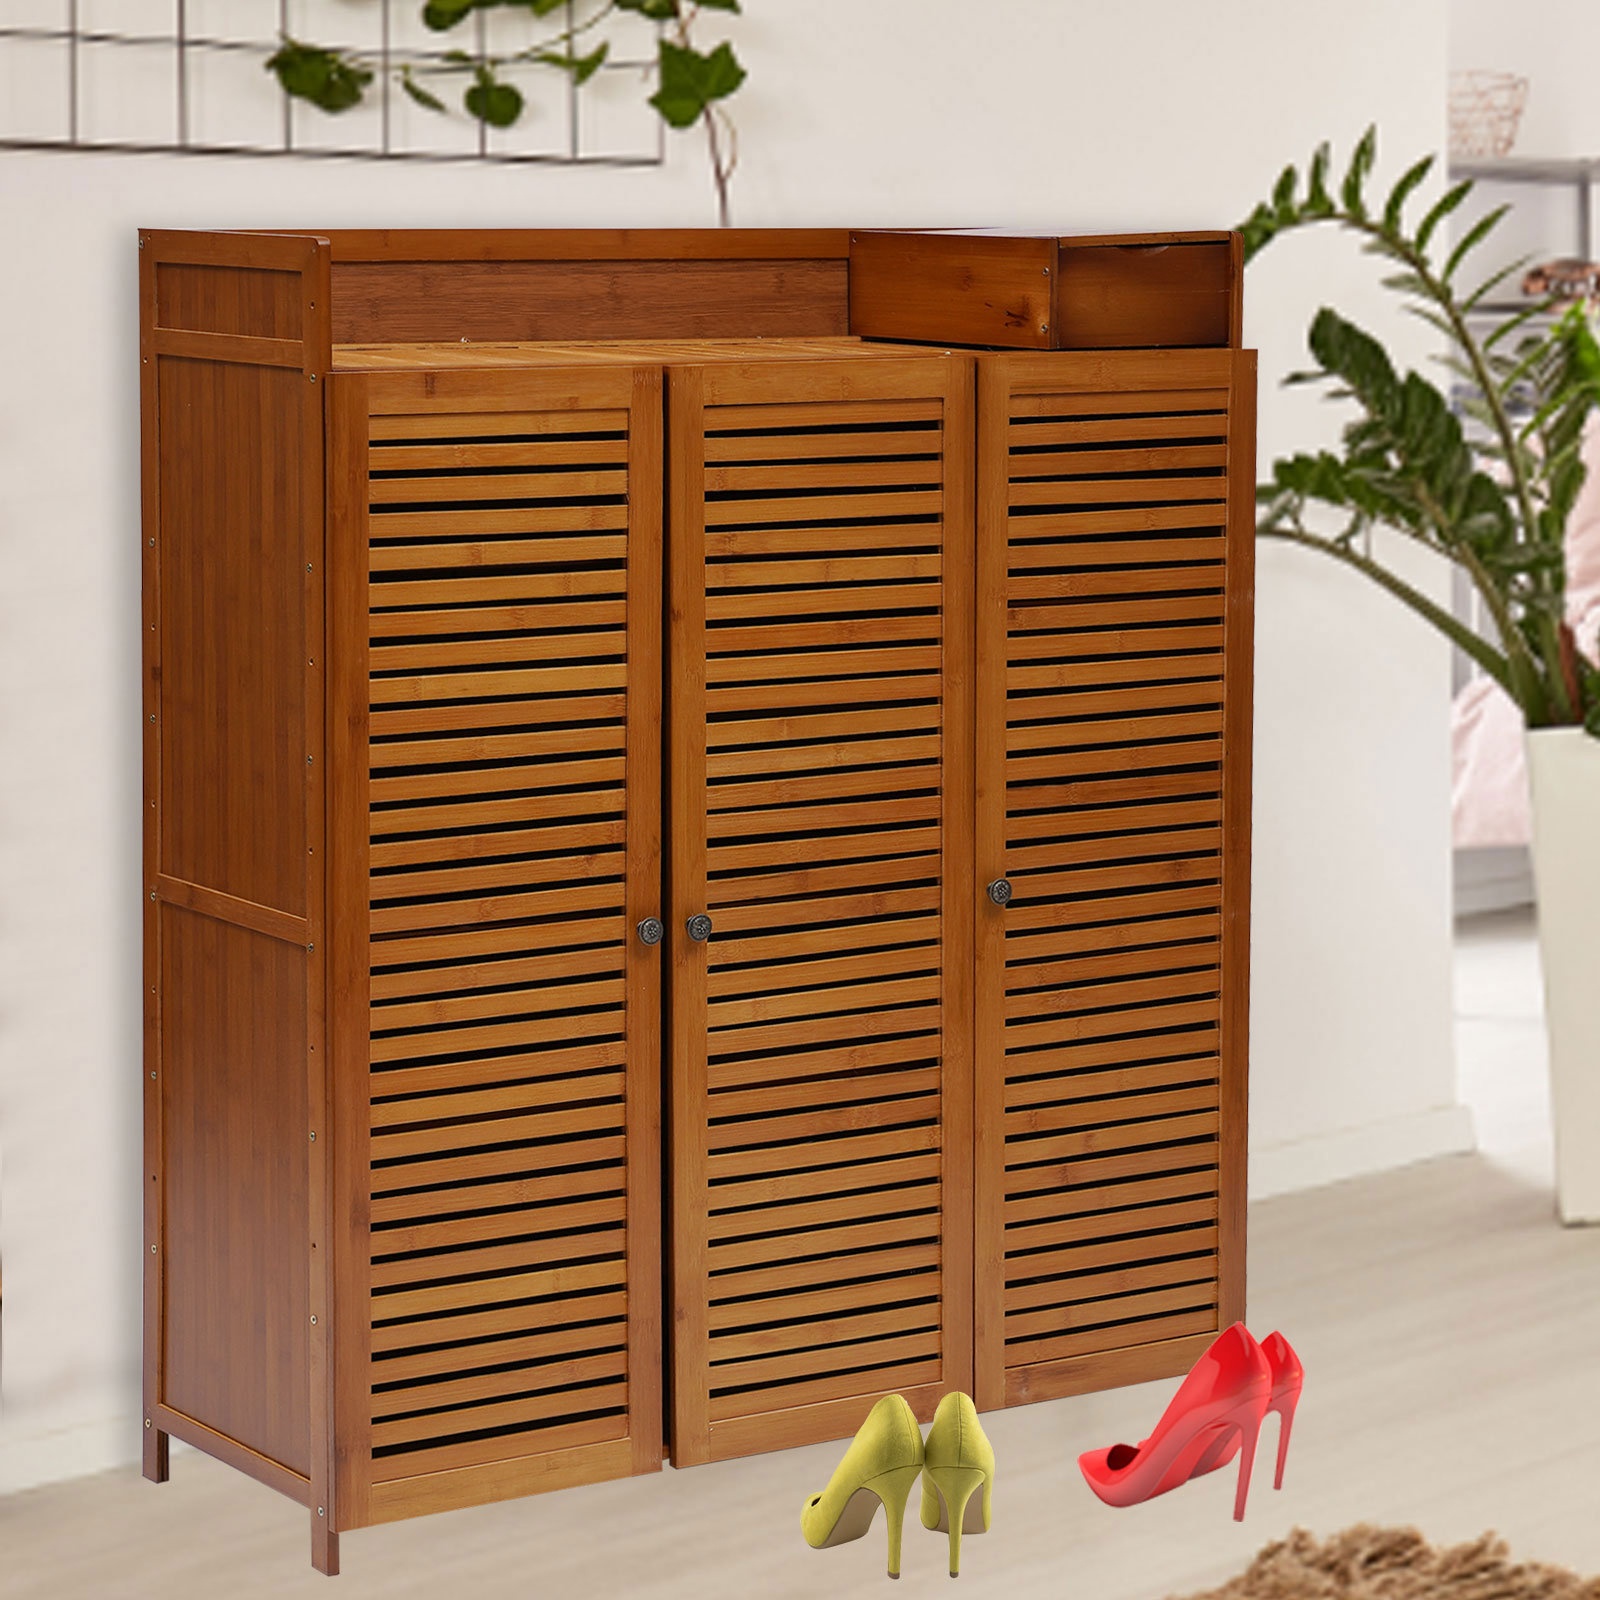 https://visualhunt.com/photos/23/21-pairs-brown-bamboo-shoe-storage-cabinet.jpg